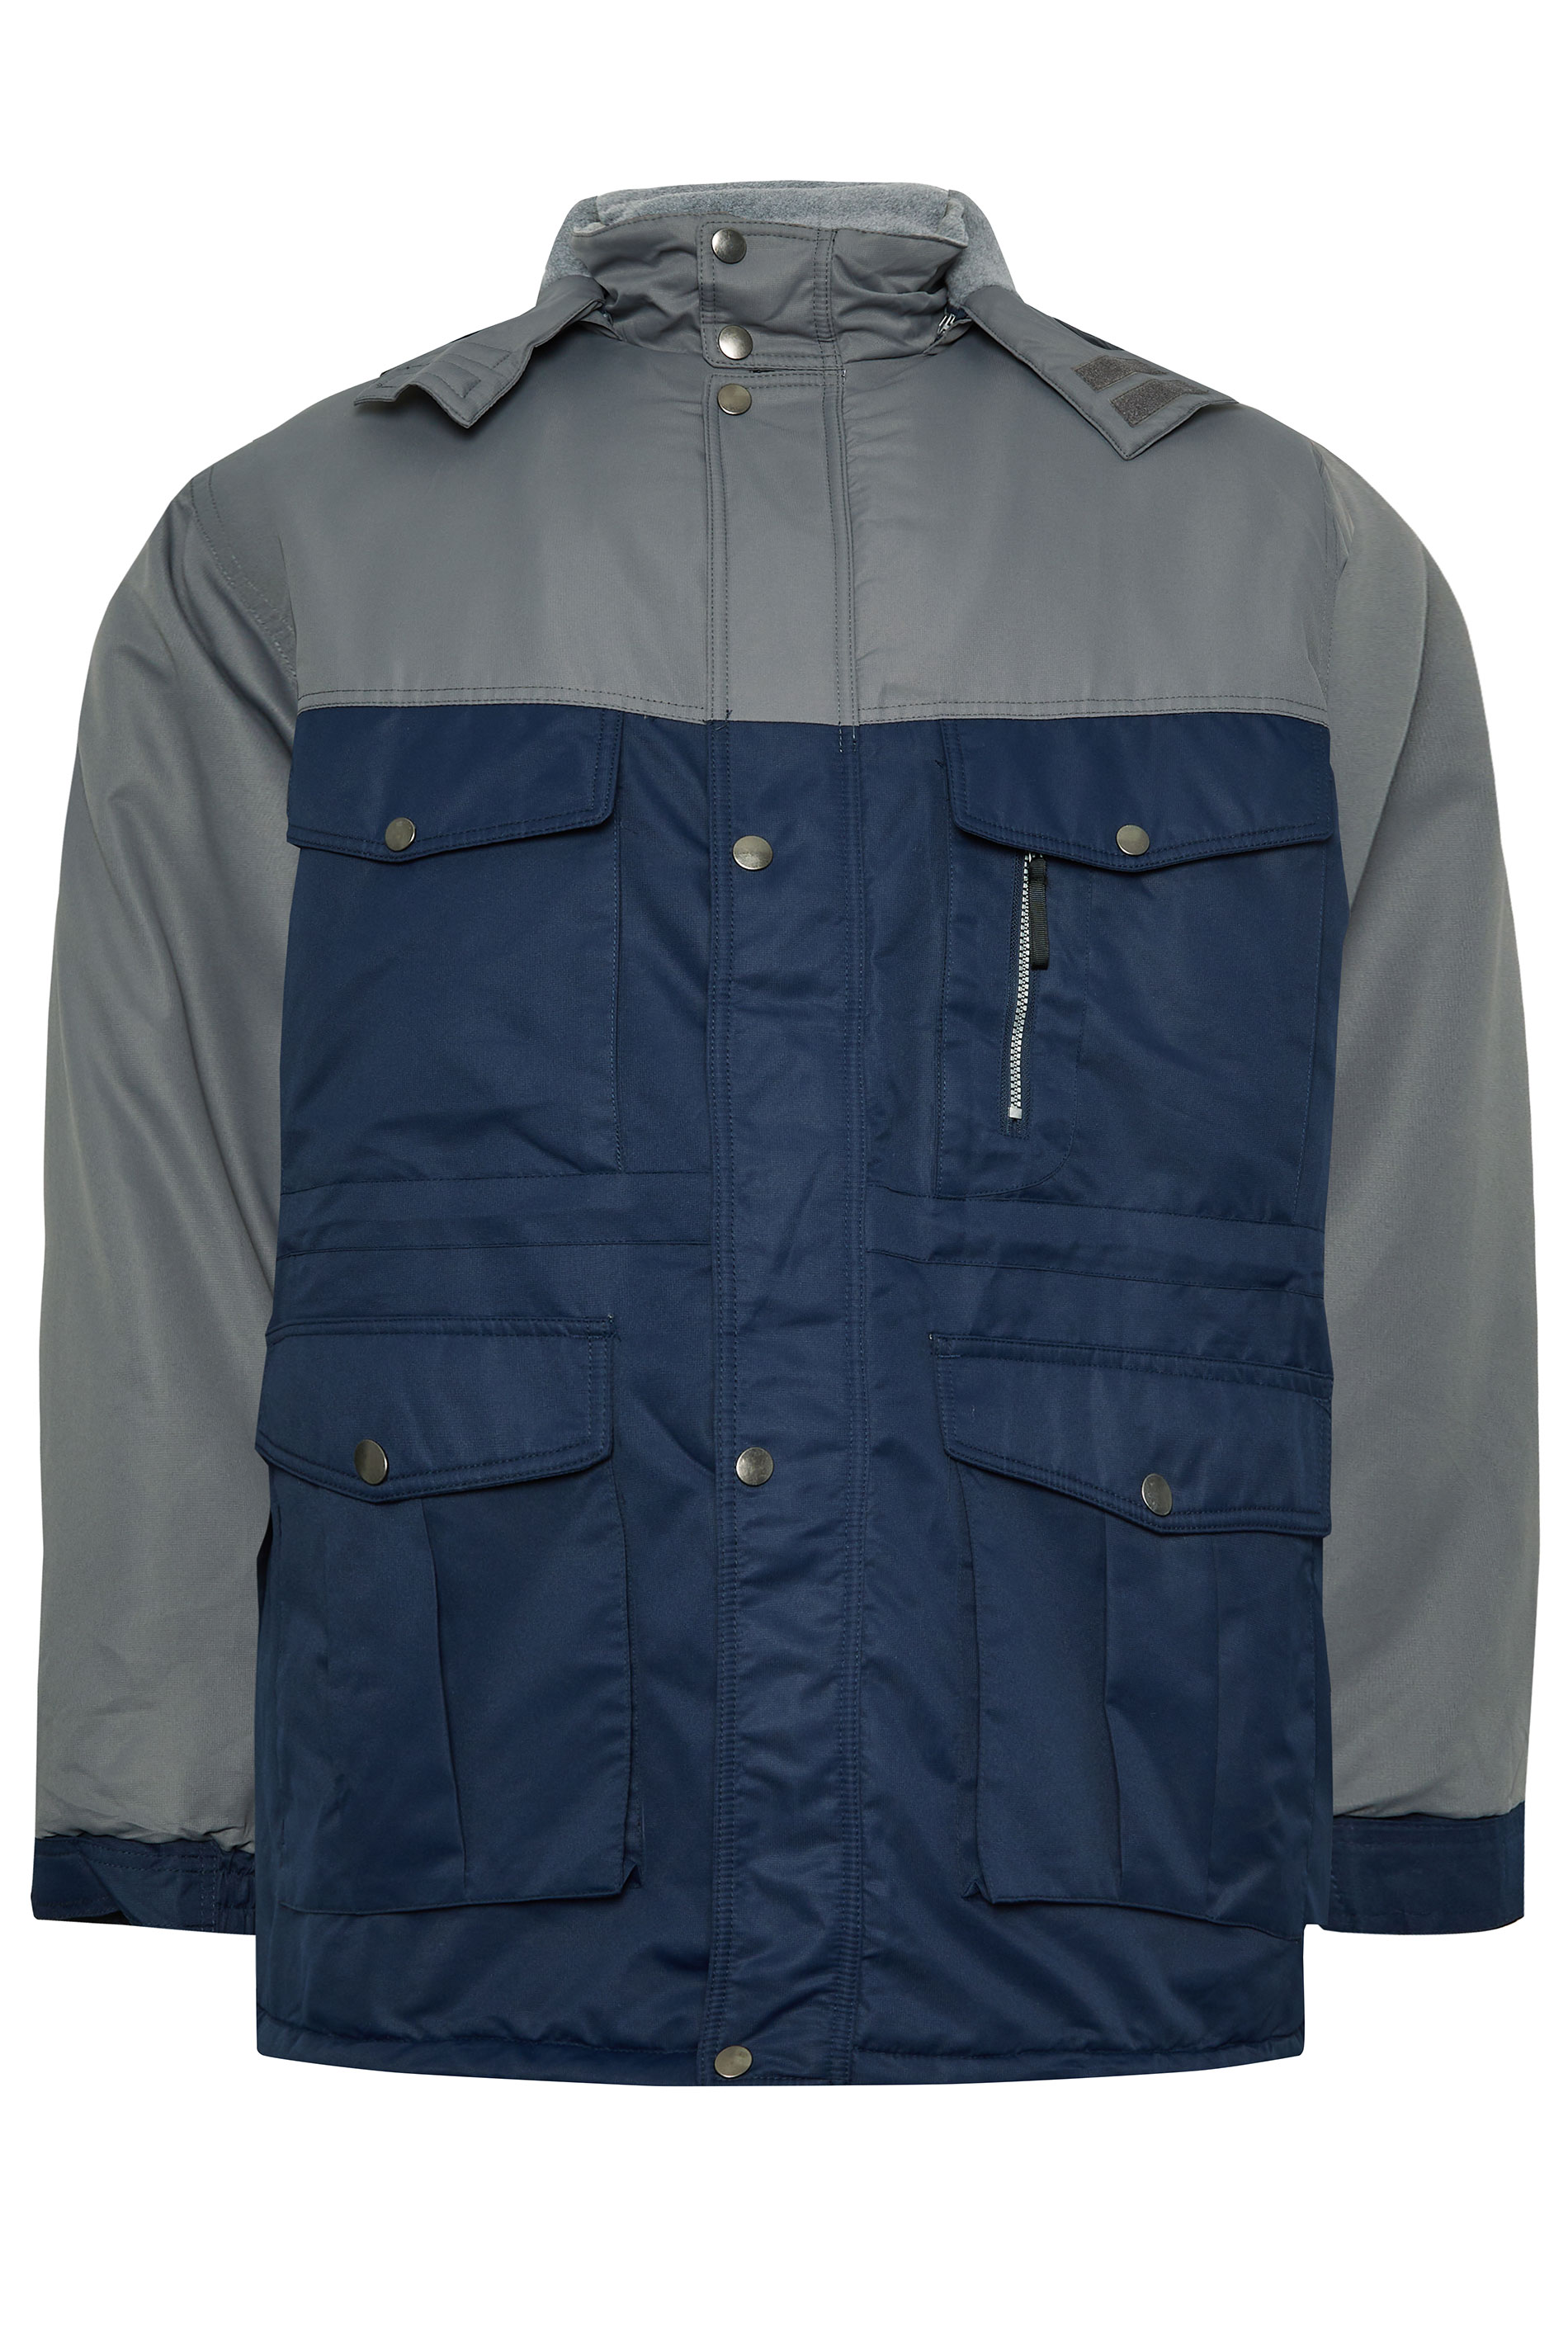 BadRhino Big & Tall Grey & Blue Fleece Lined Hooded Coat | BadRhino 1